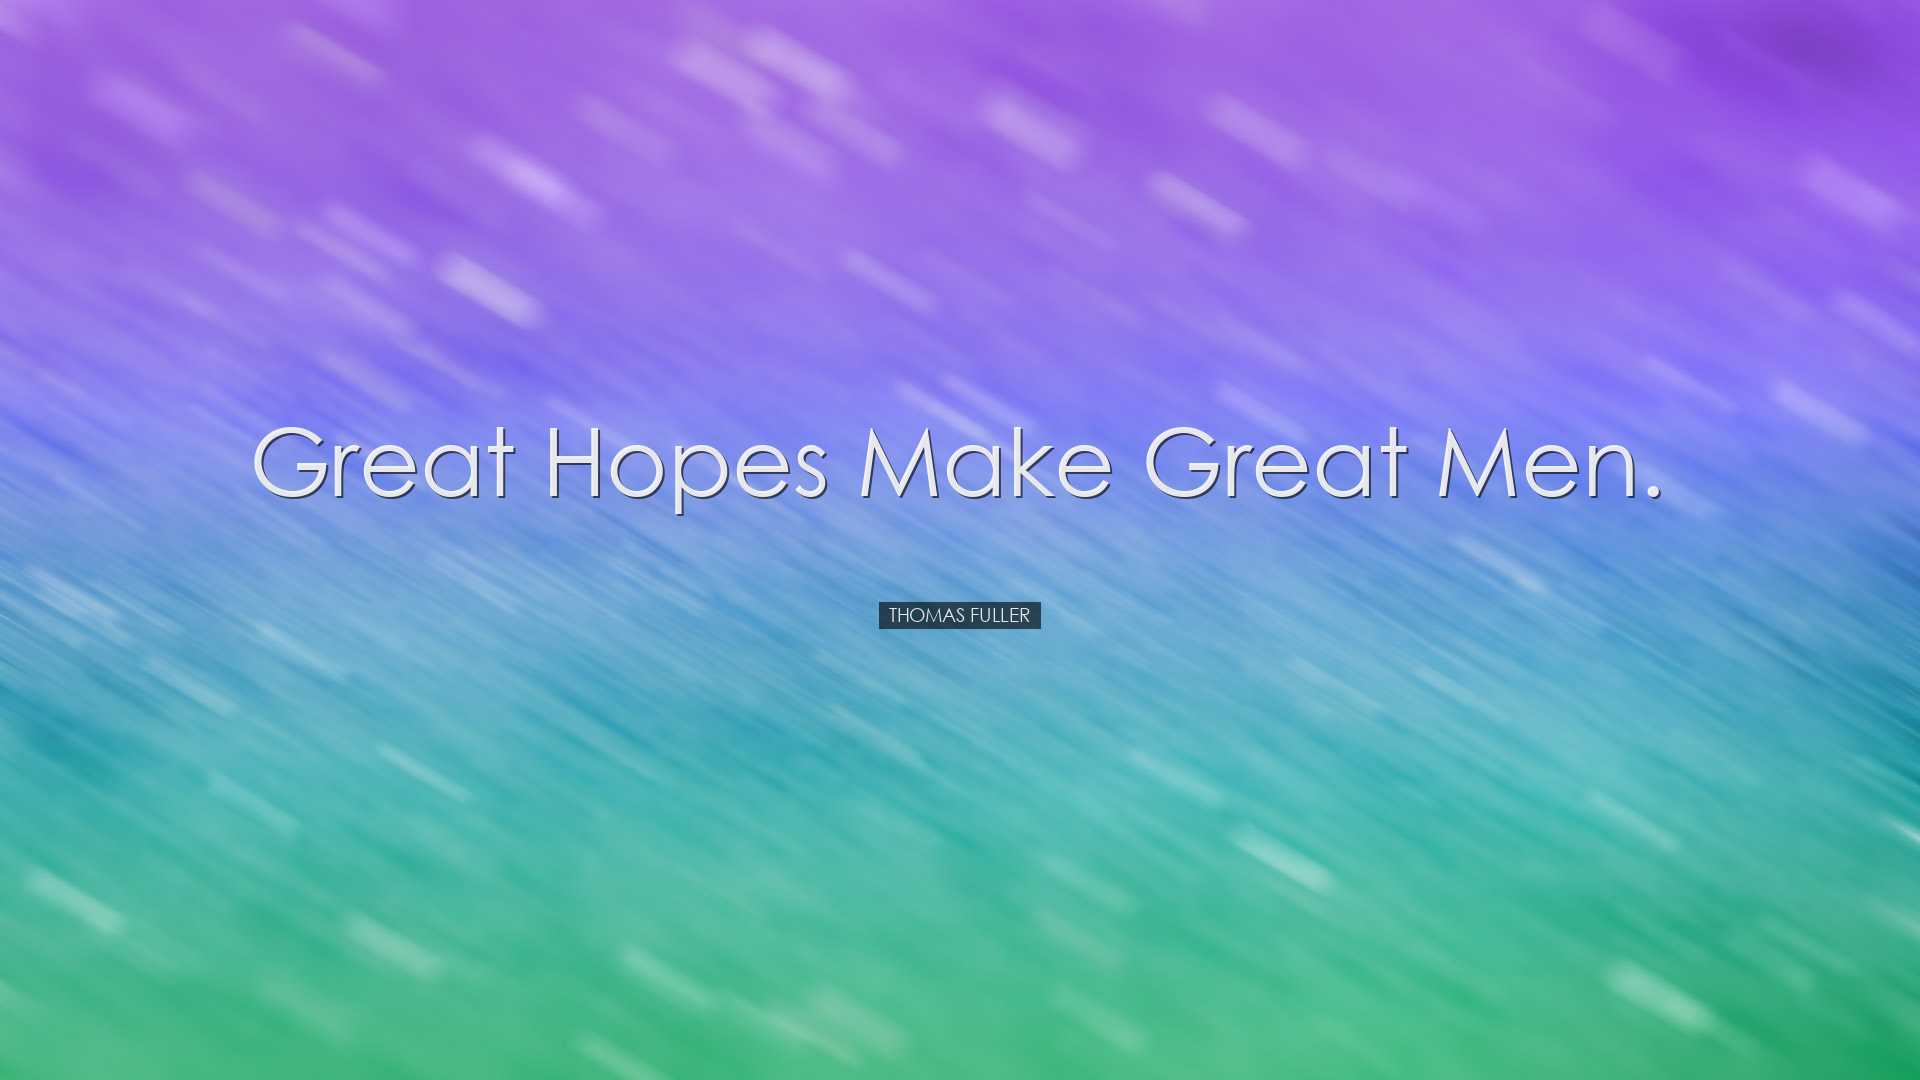 Great hopes make great men. - Thomas Fuller